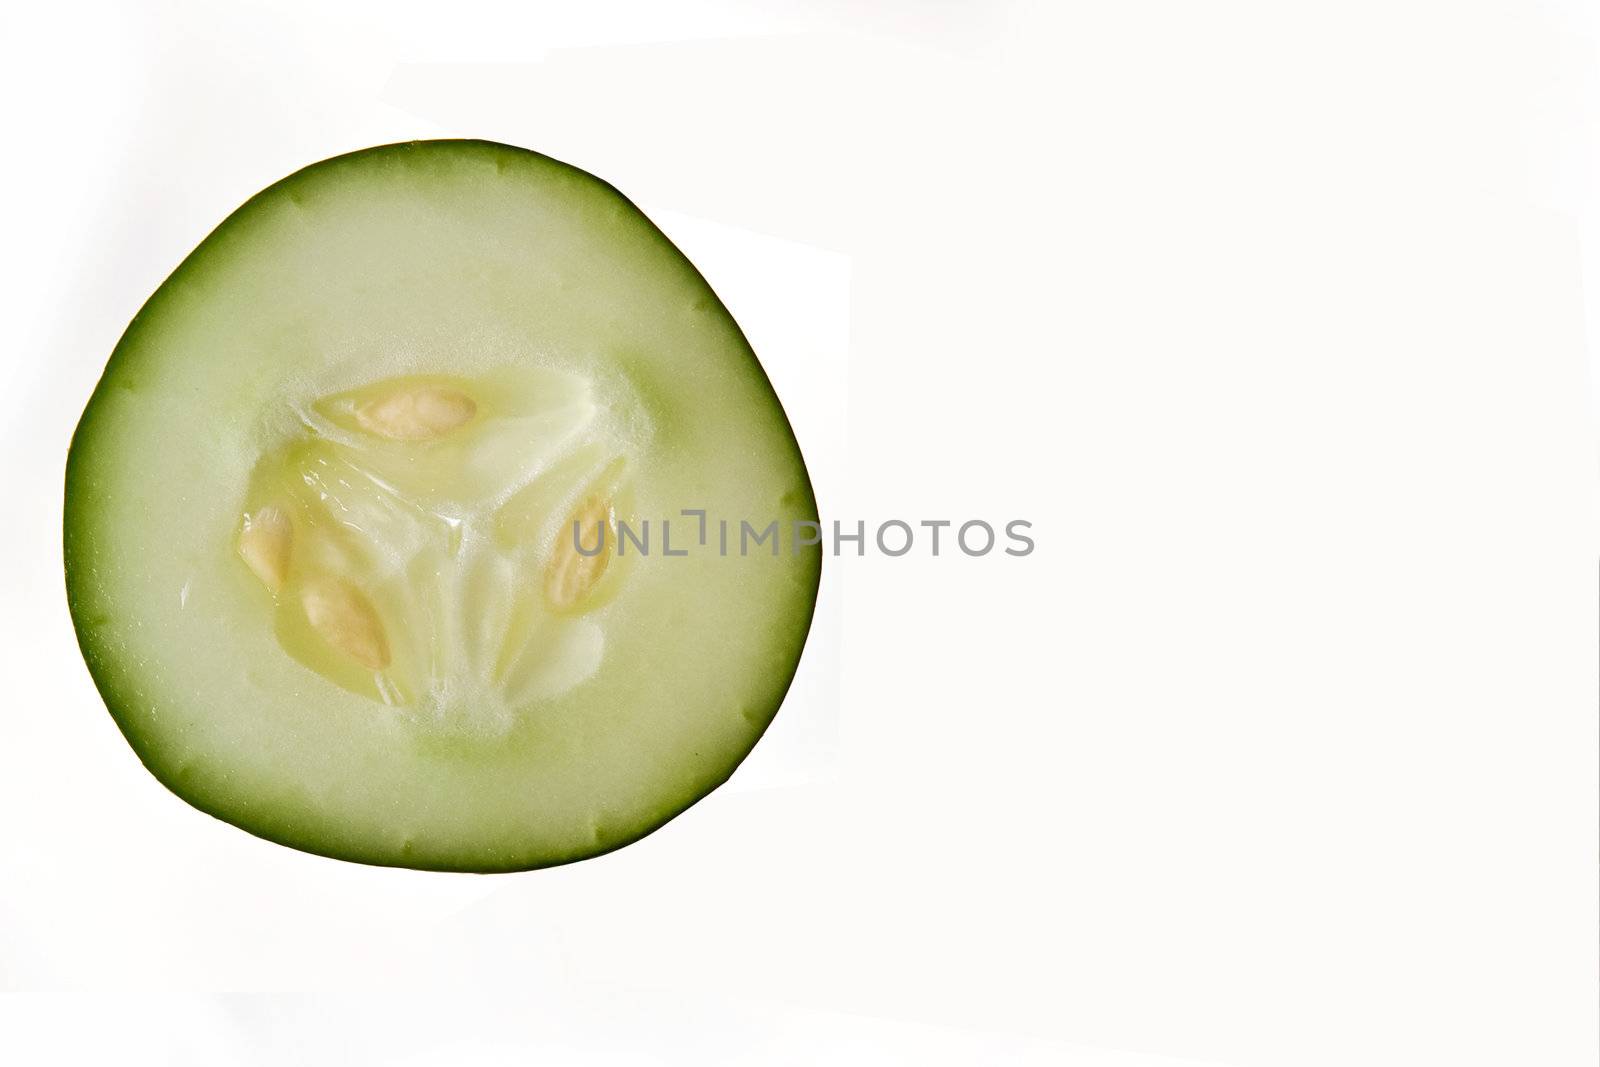 Cucumber wedge by phakimata